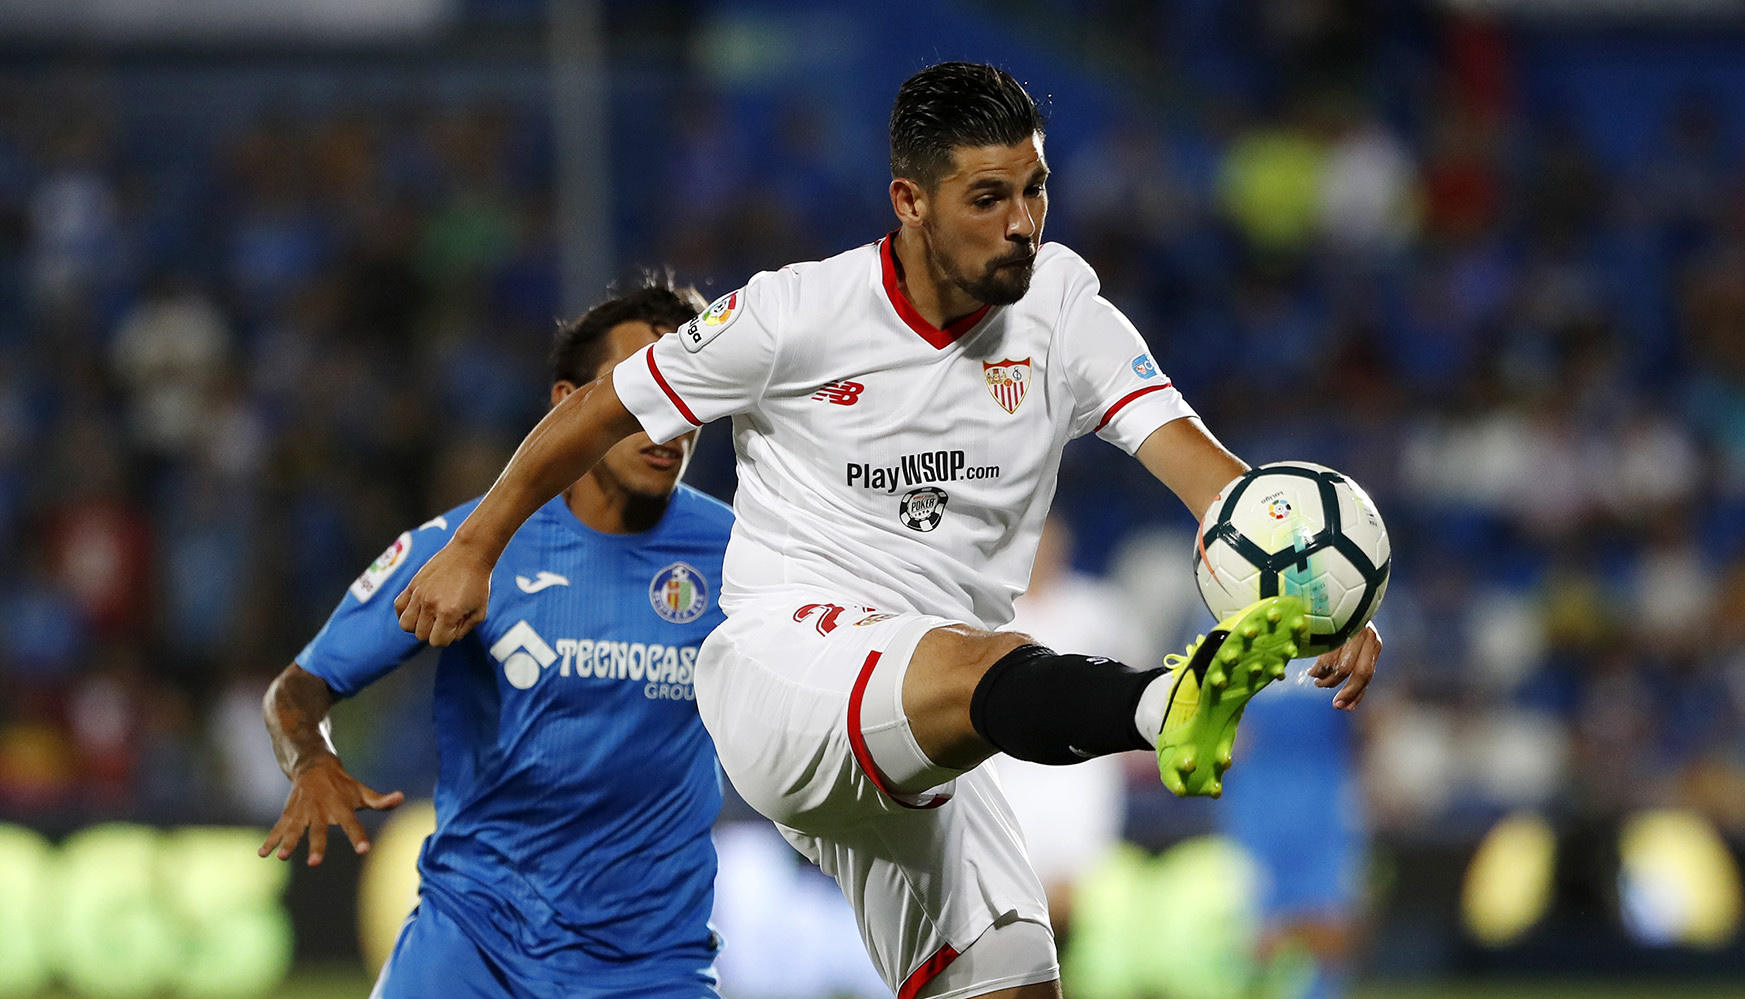 Nolito of Sevilla FC against Getafe